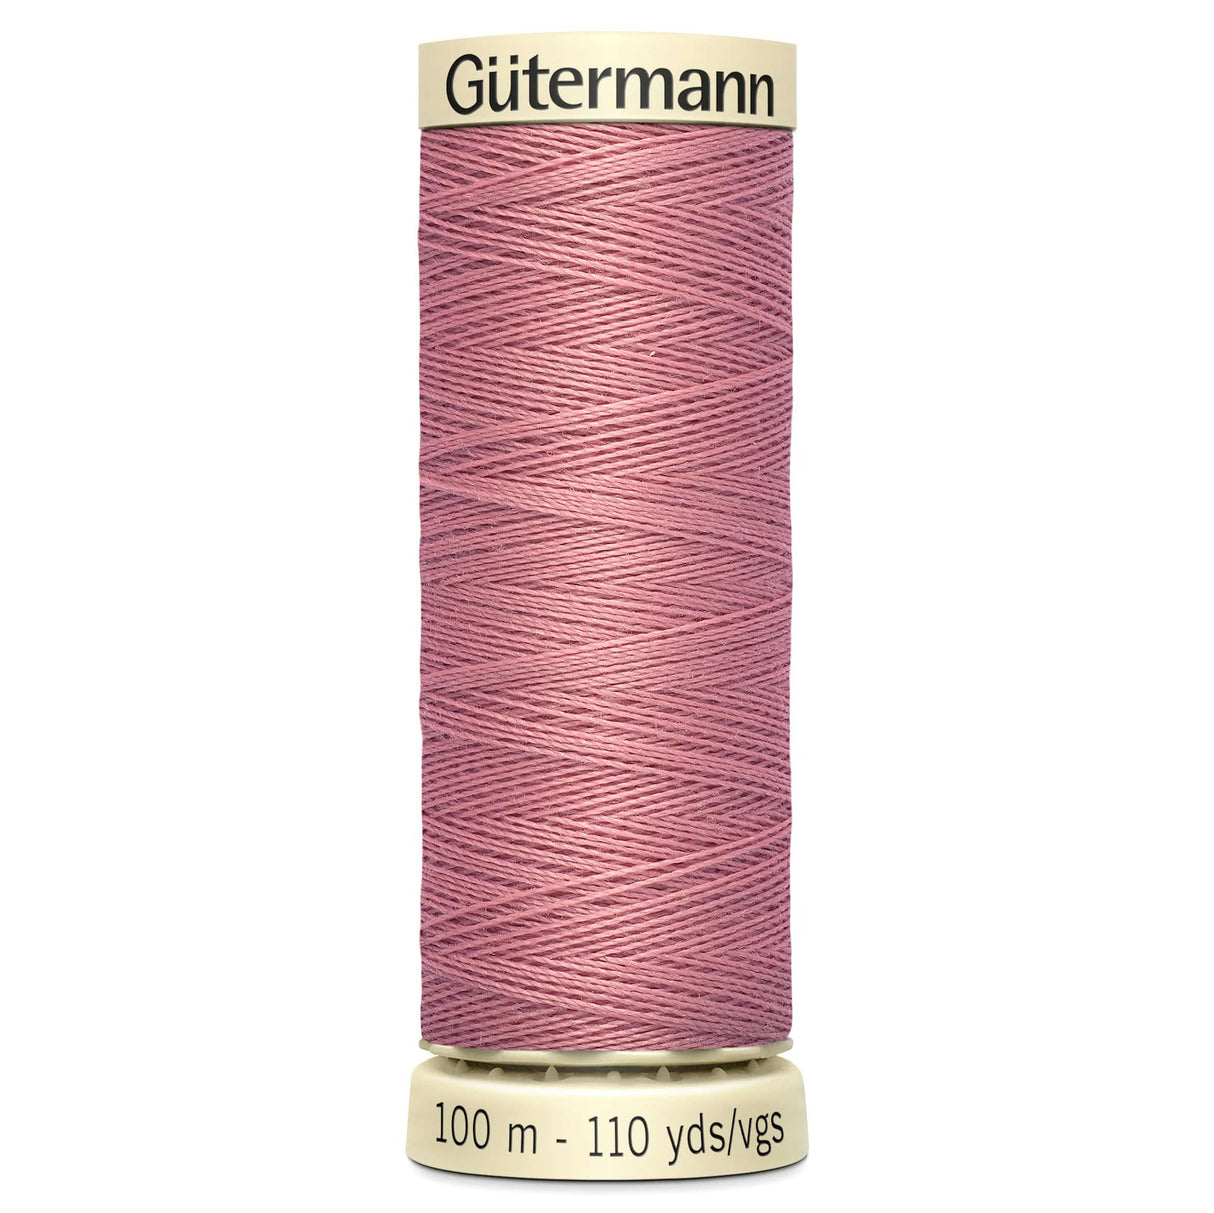 Groves Haberdashery 473 Gutermann Thread Sewing Cotton 100 m Black to Pink